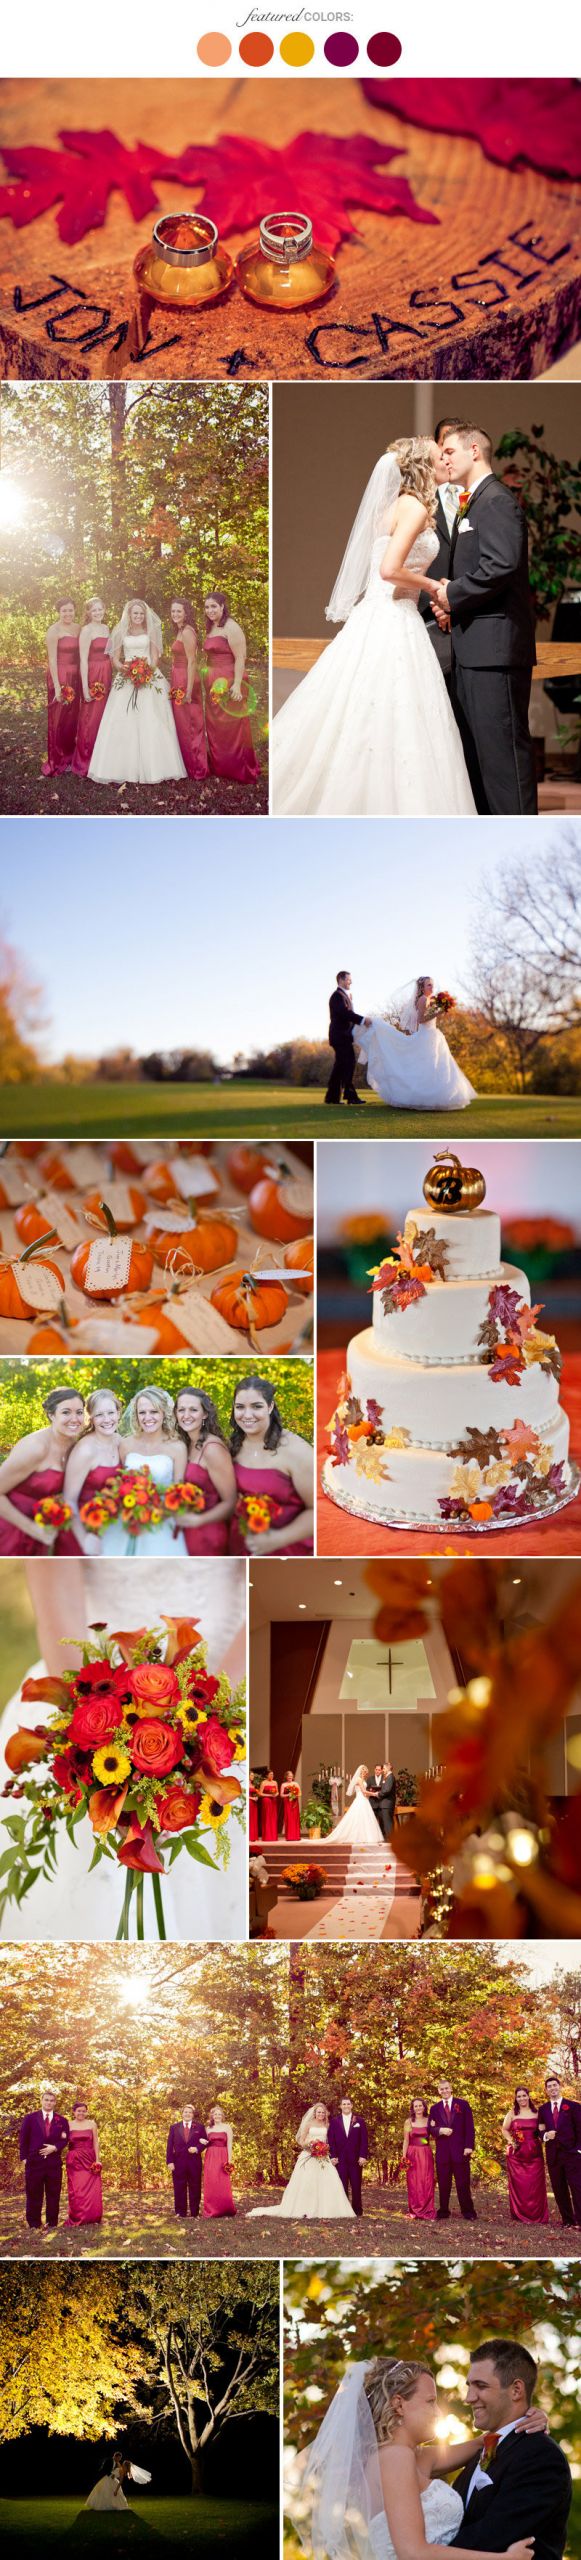 Fall Colors For Weddings
 Fall Wedding Colors 25 binations You ll Love BridalGuide